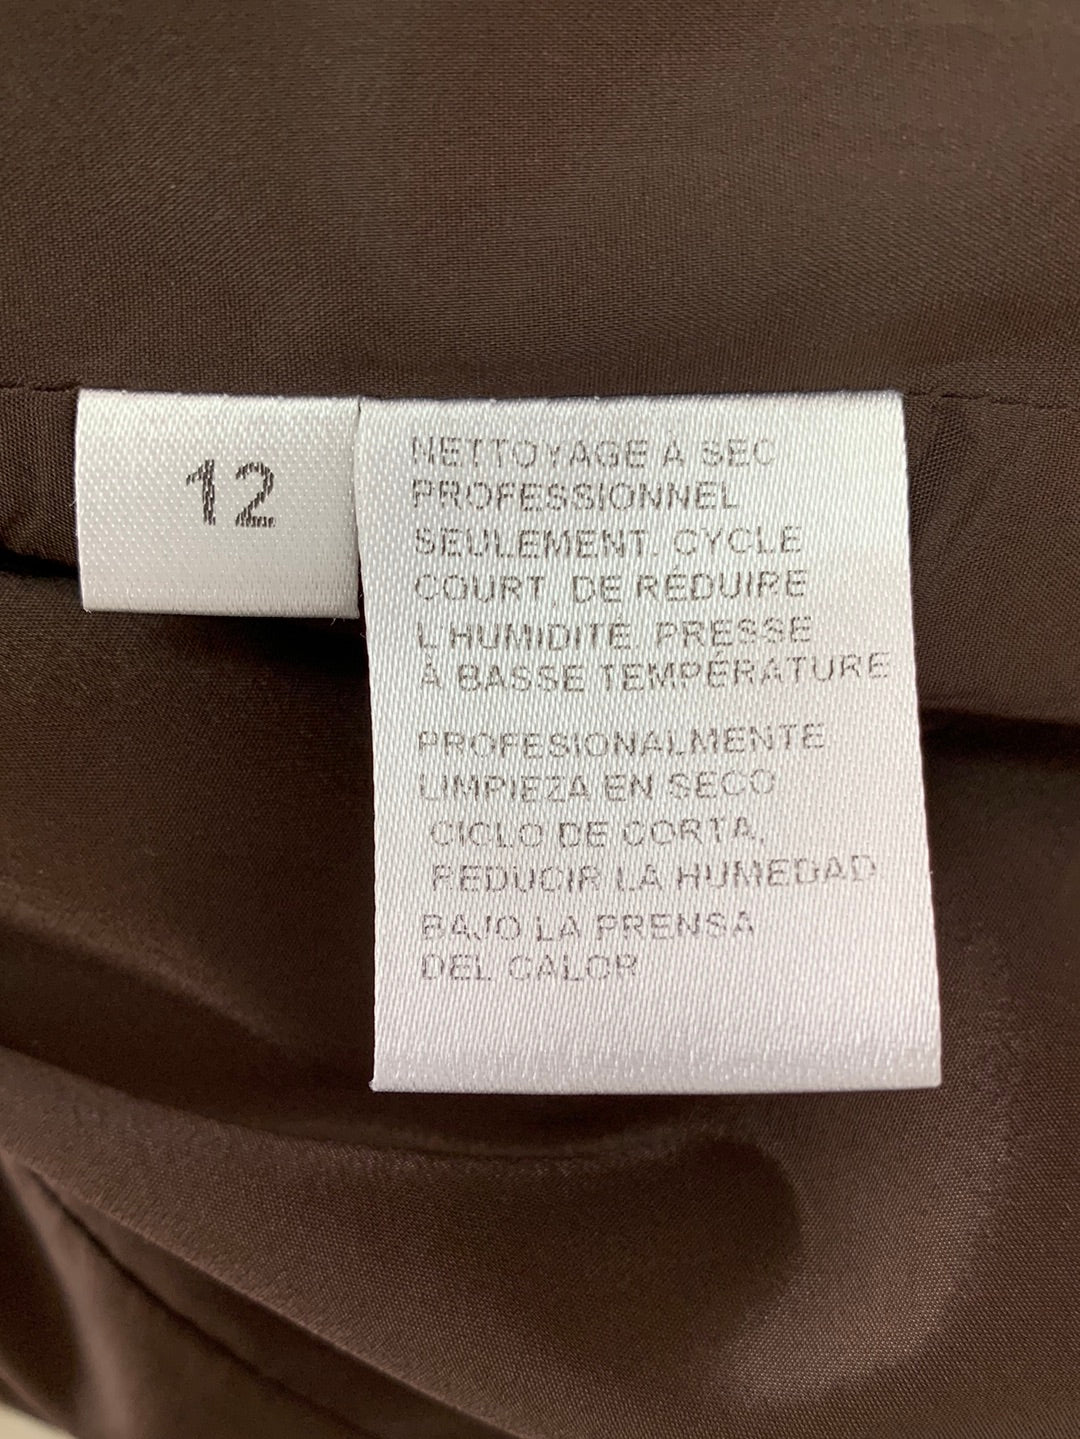 DONCASTER brown 100% Wool (lined) Jacket & Pants 2 pc Pantsuit - 12